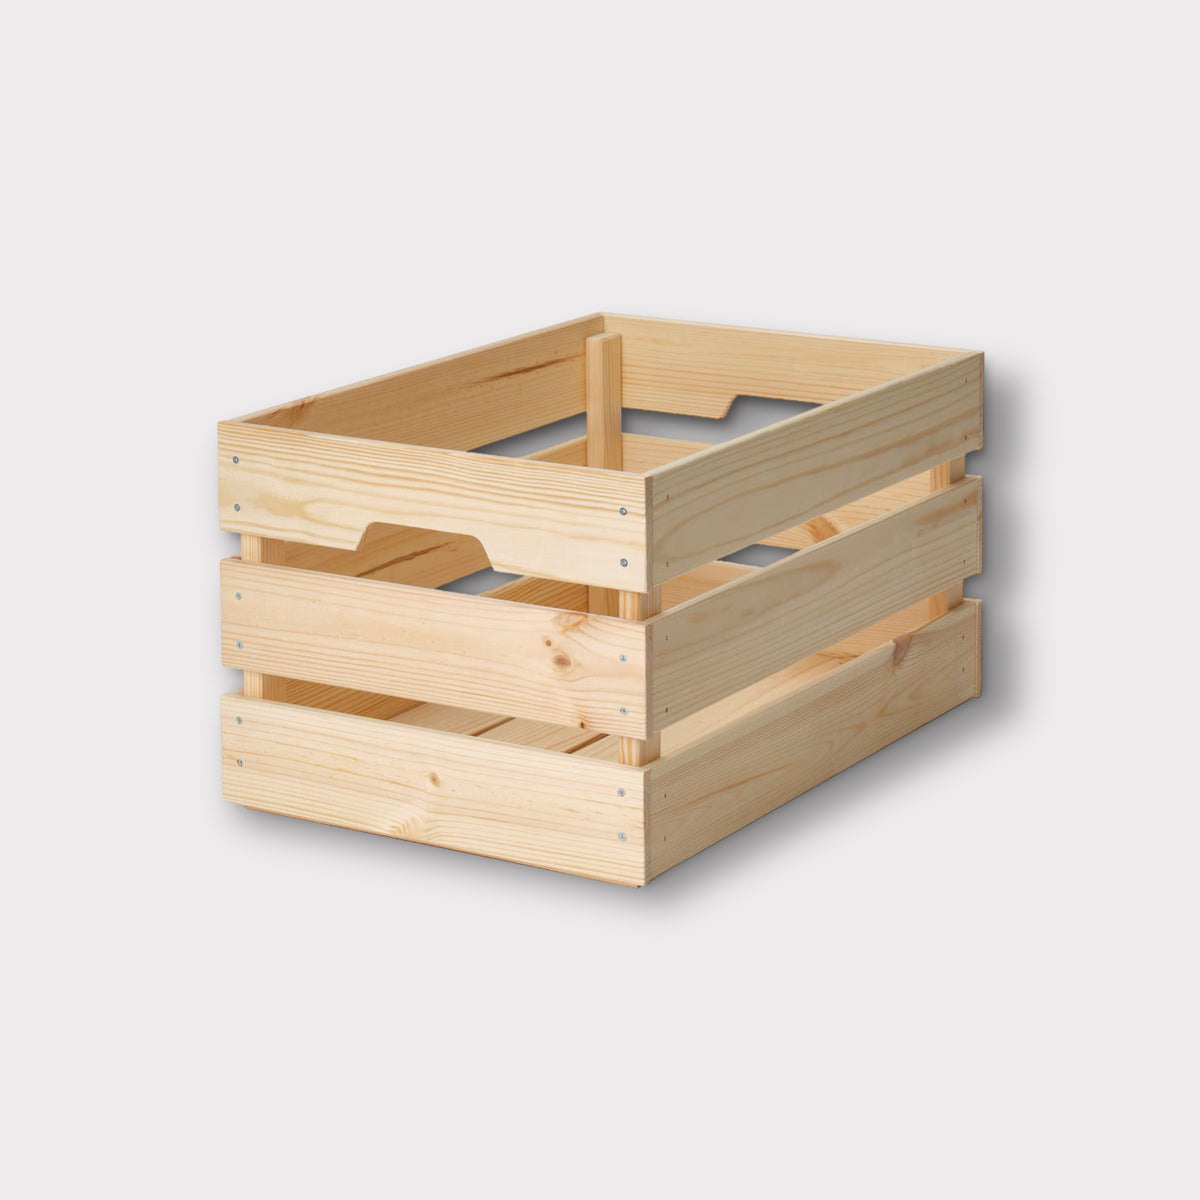 Wooden Crate Hamper